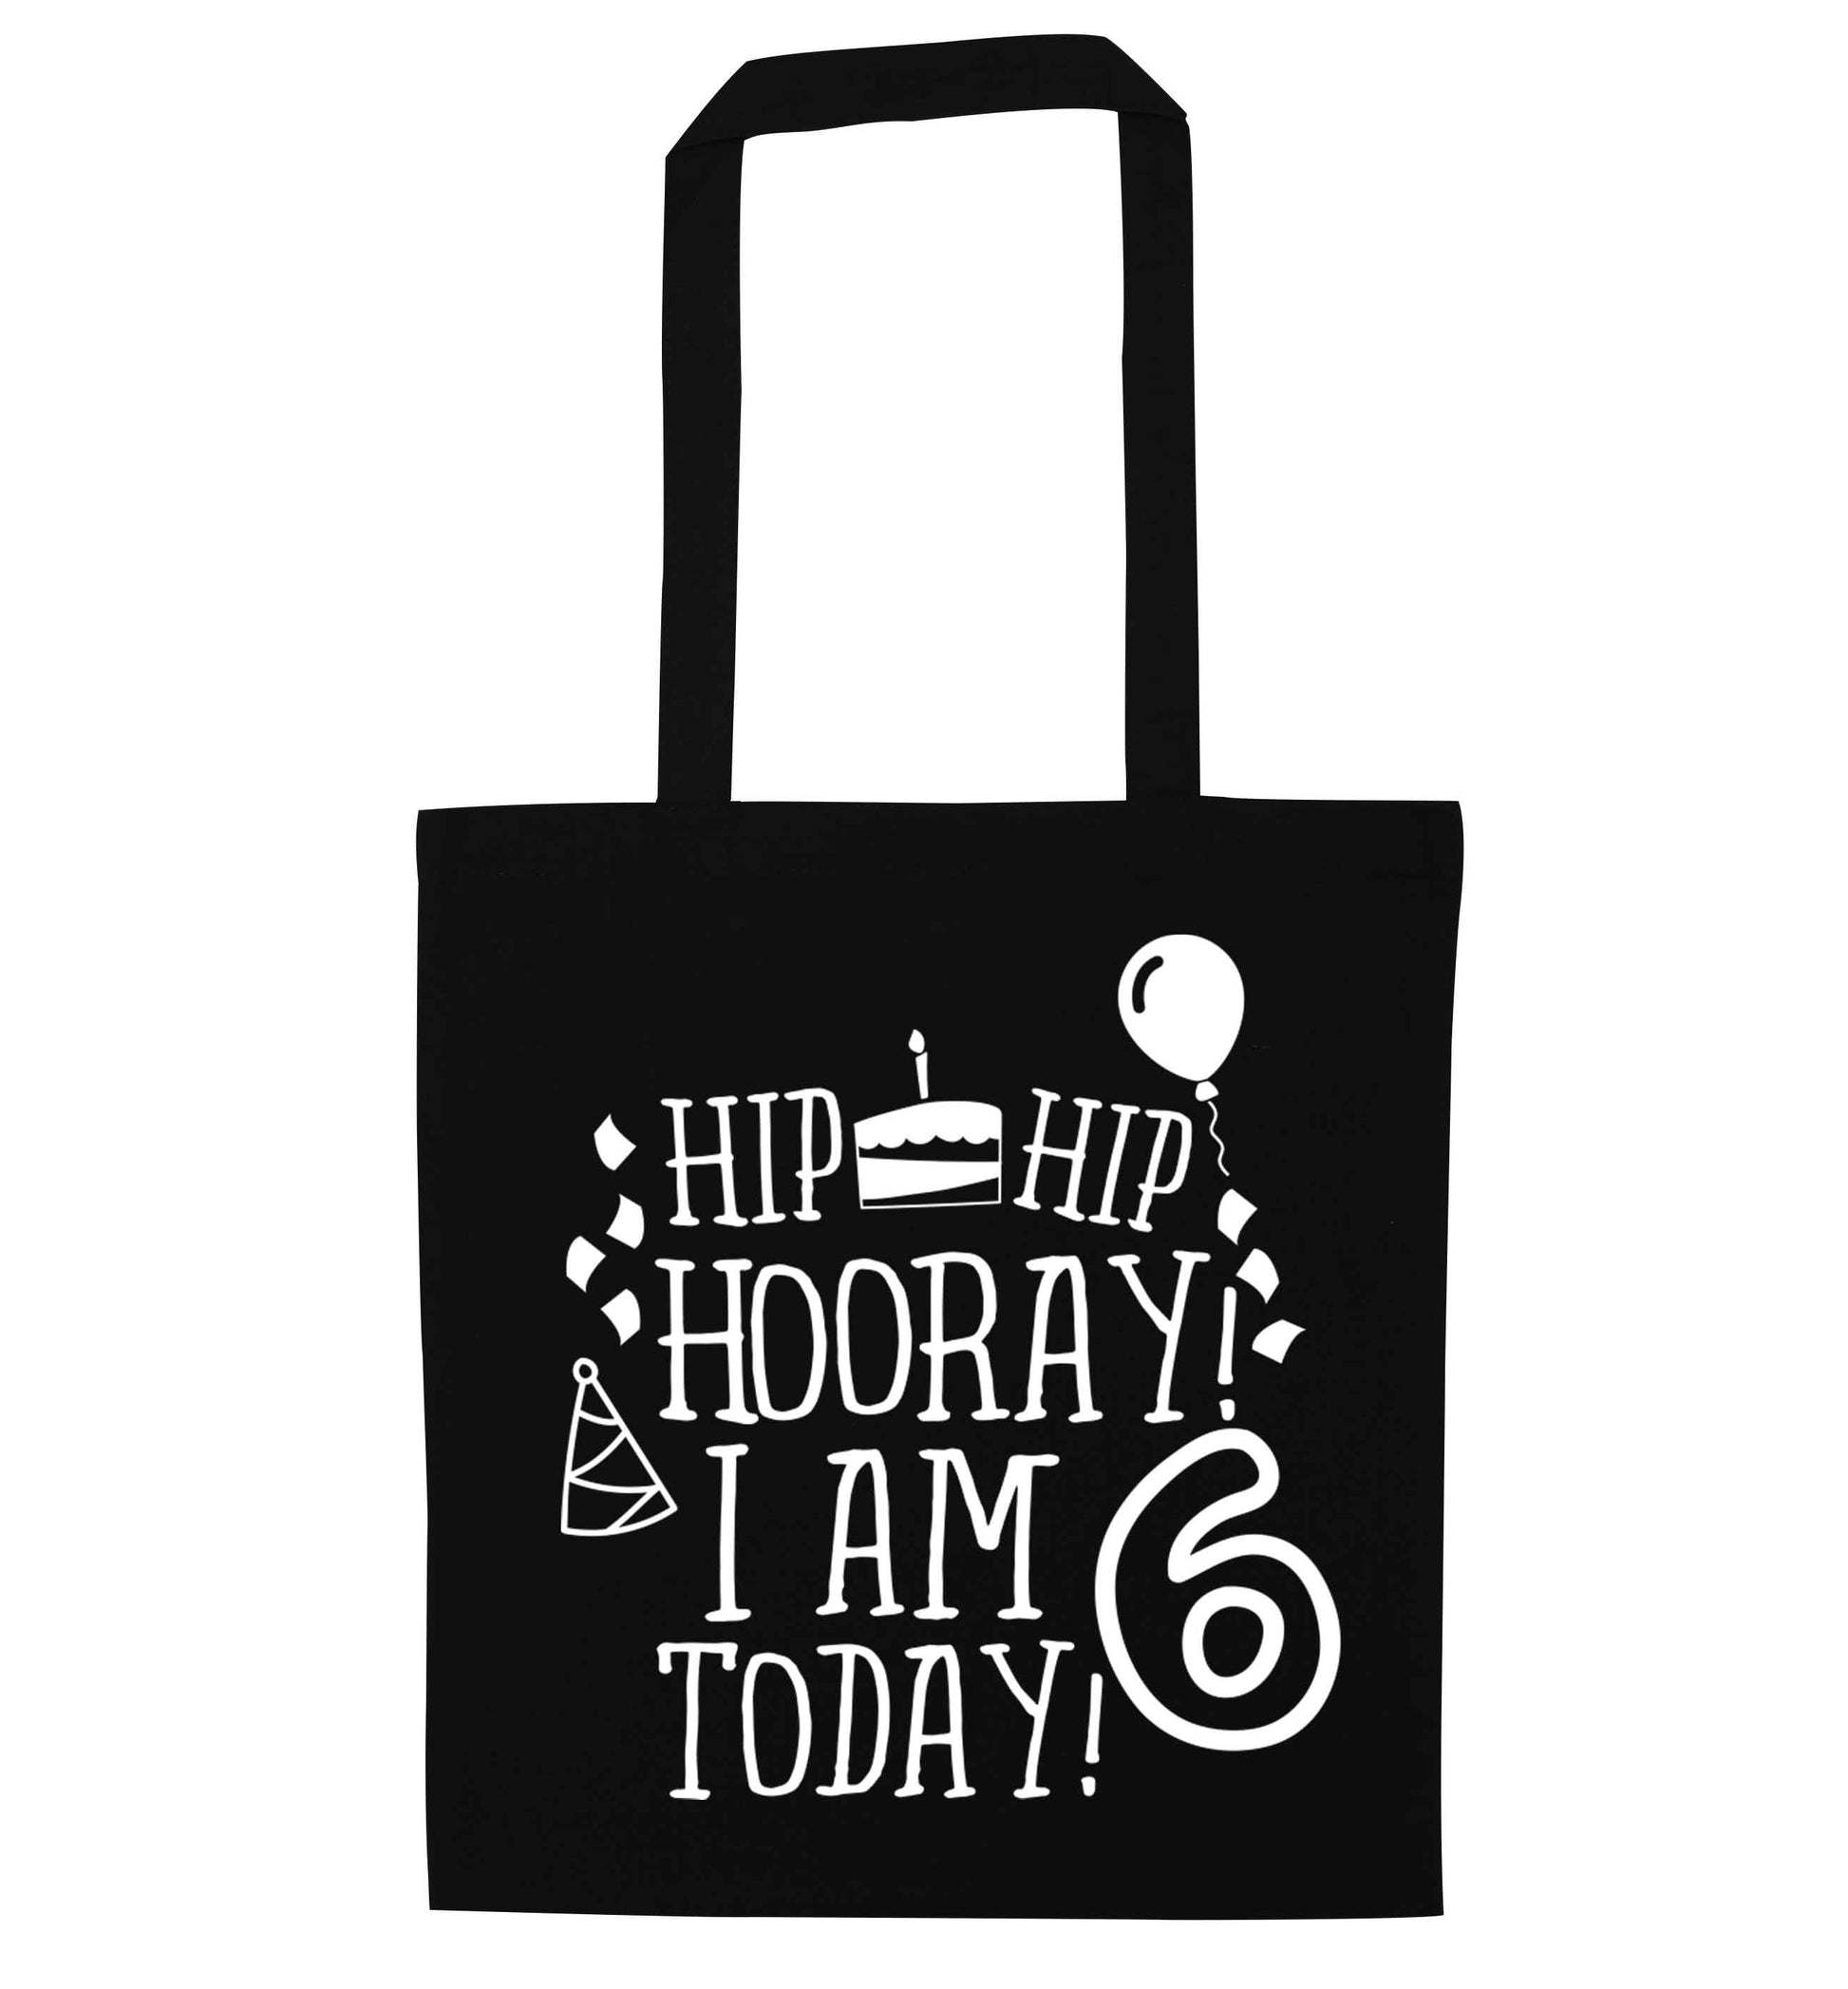 Hip hip hooray I am six today! black tote bag